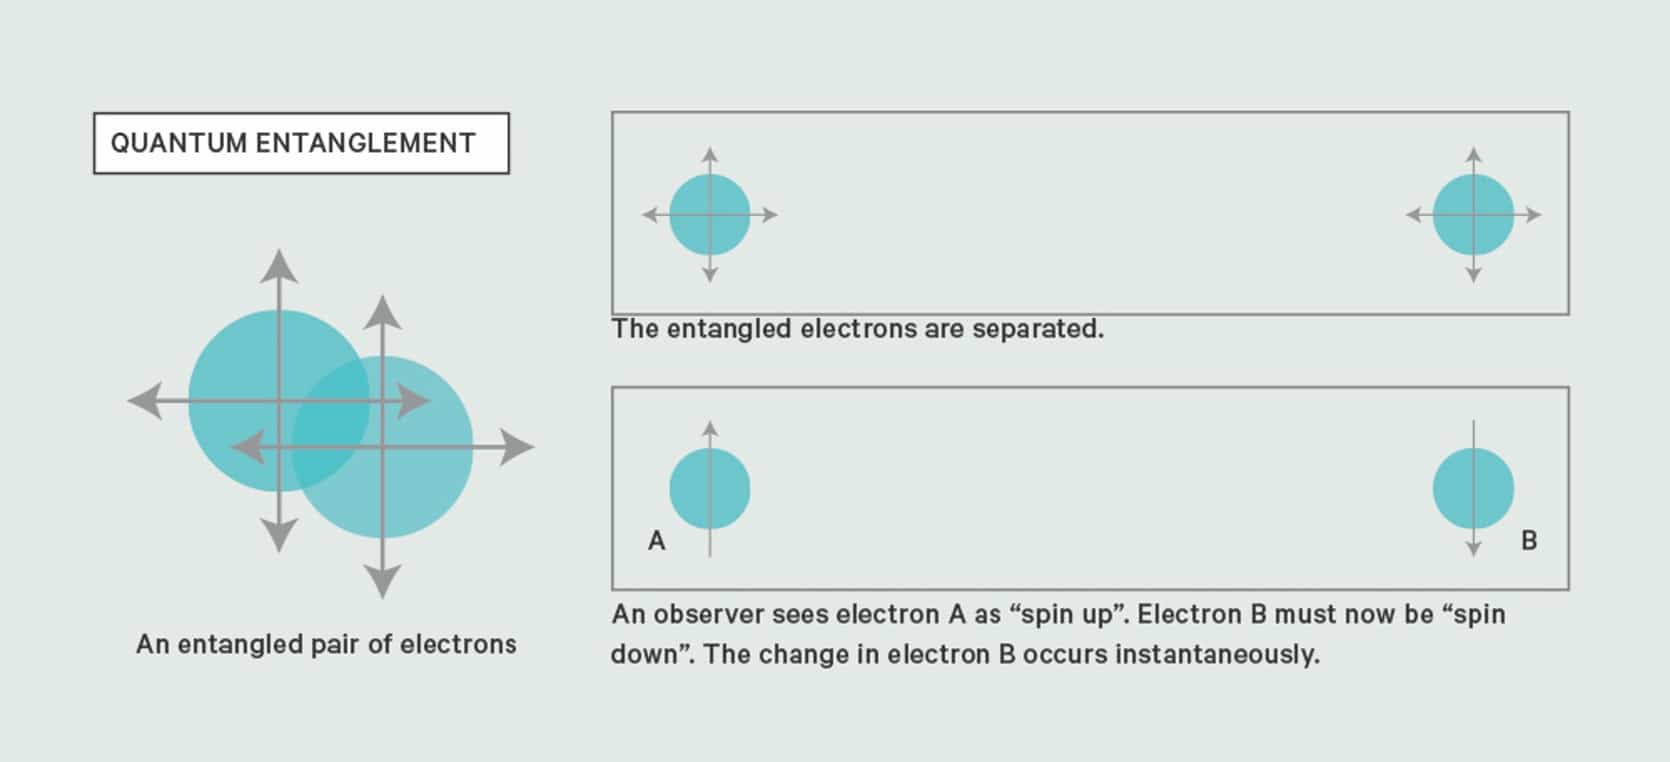 Quantum entanglement explained